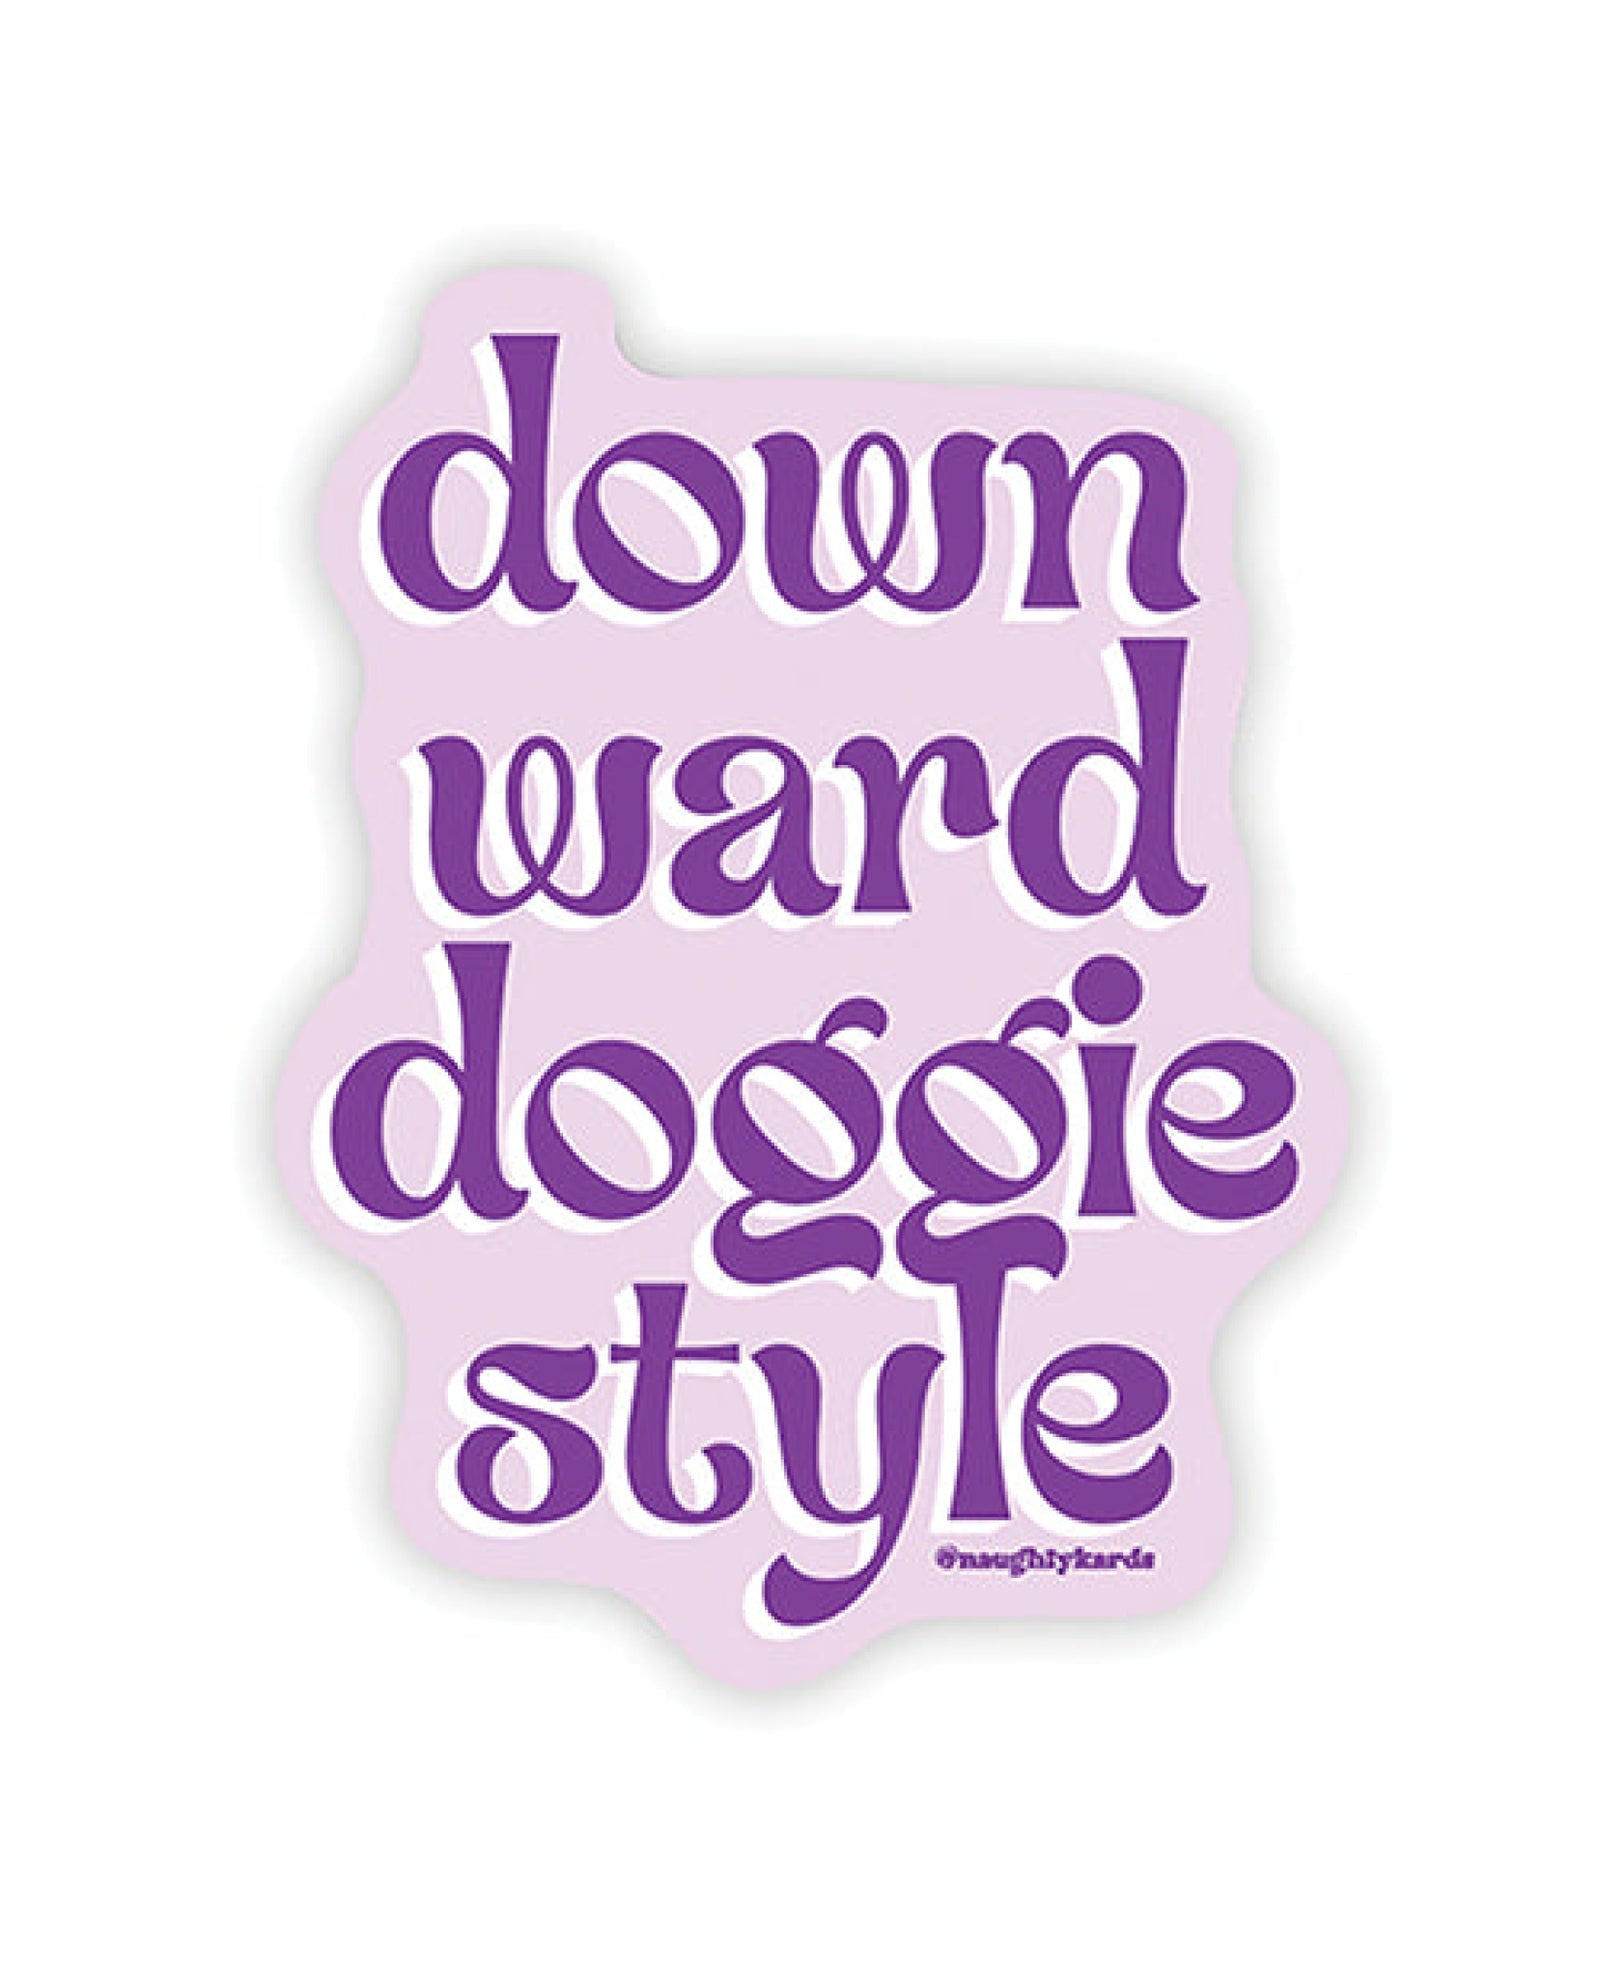 Downward Doggie Naughty Sticker - Pack Of 3 Kush Kards